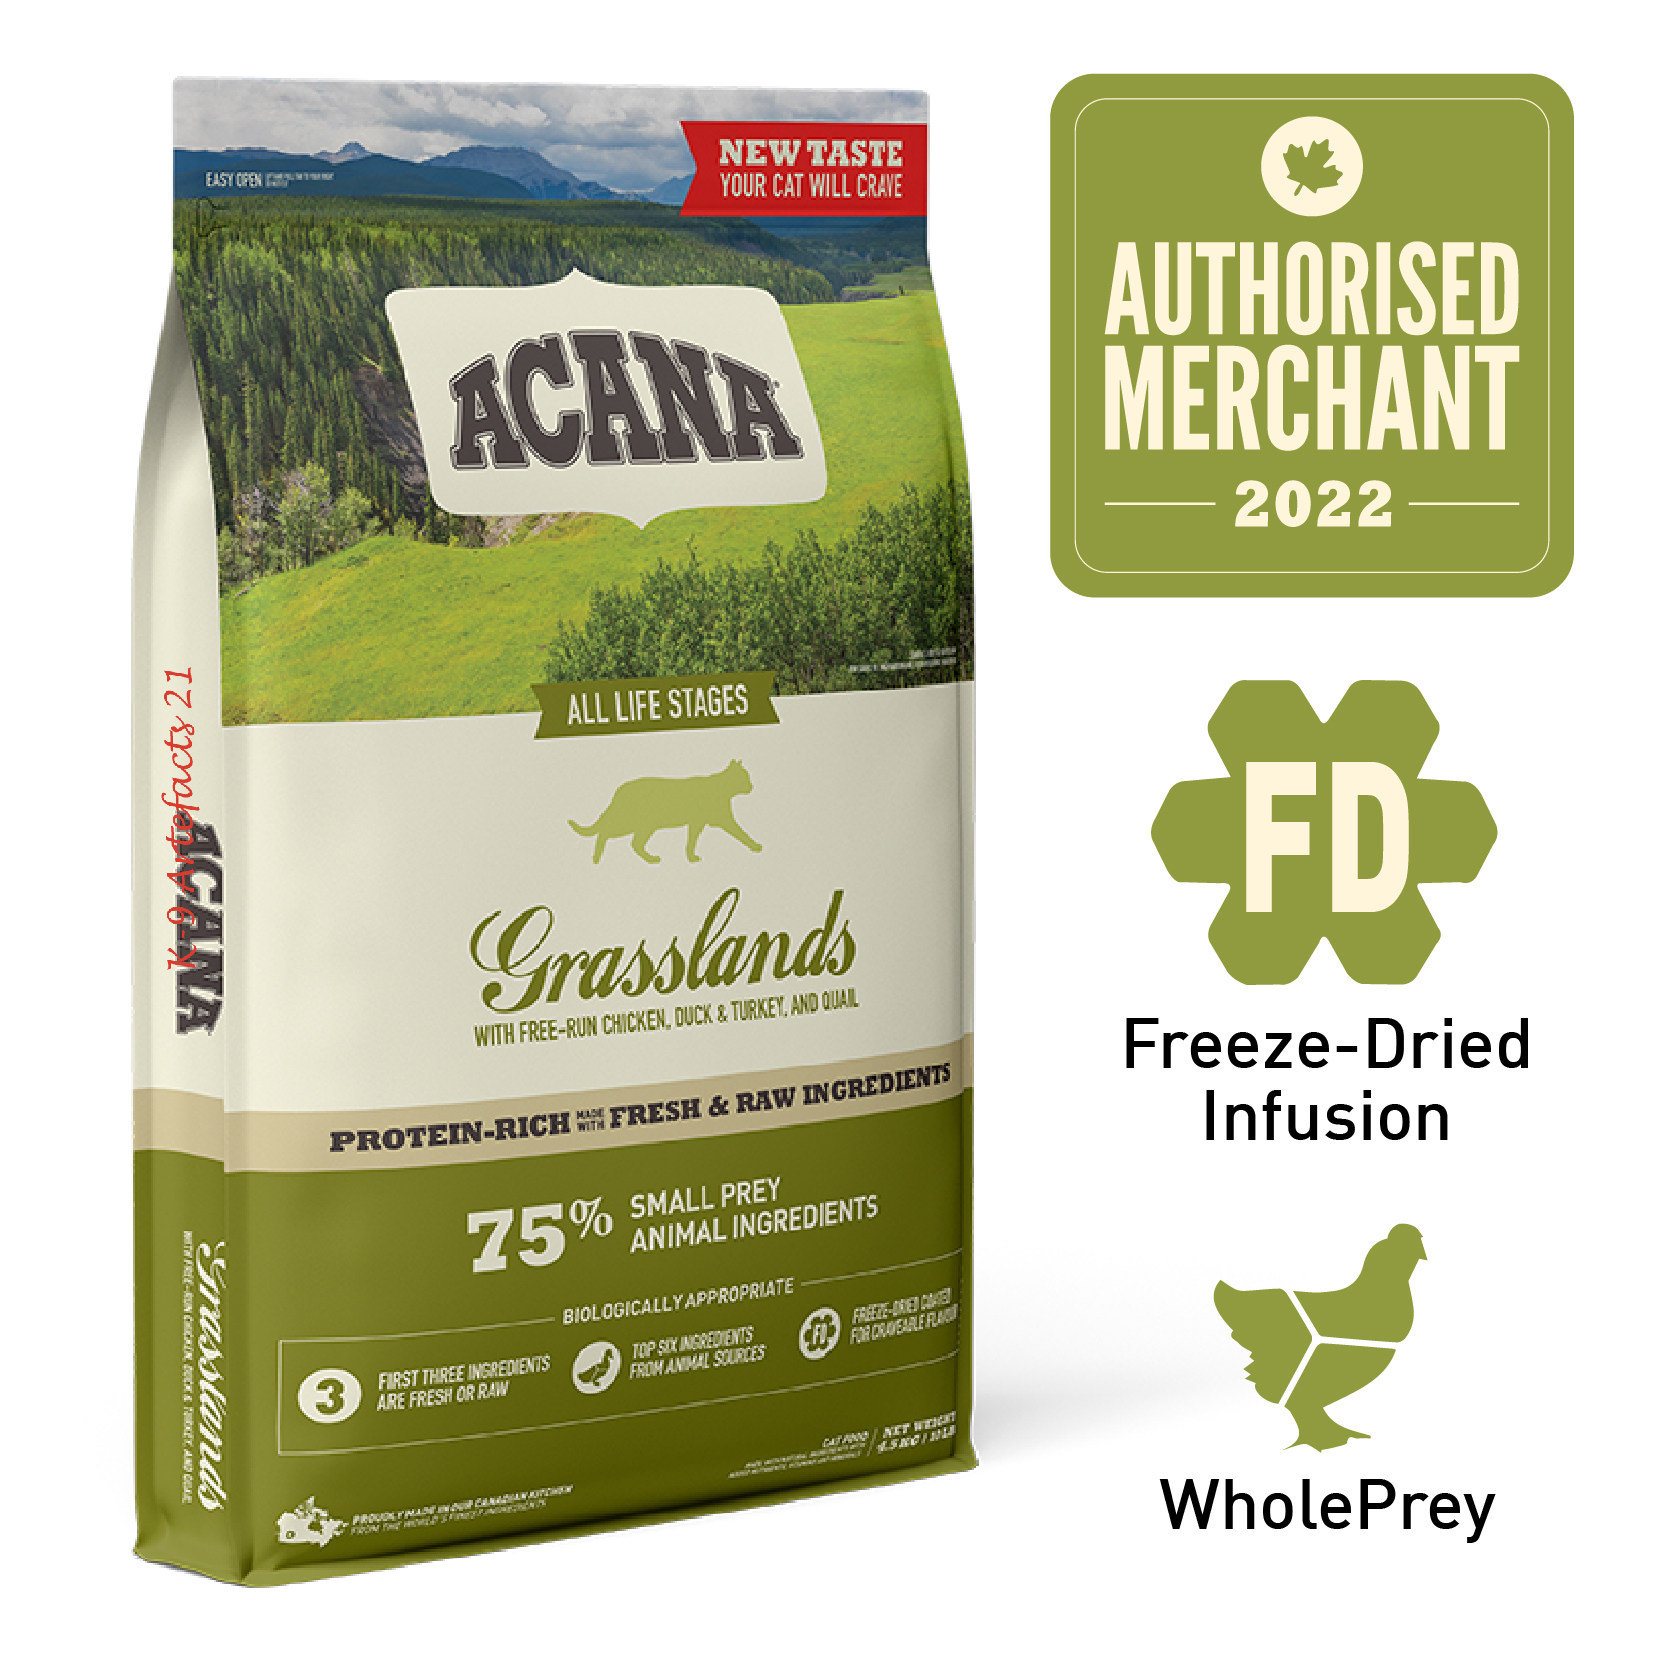 ACANA Regionals Freeze-Dried Infused Grasslands Cat Dry Food